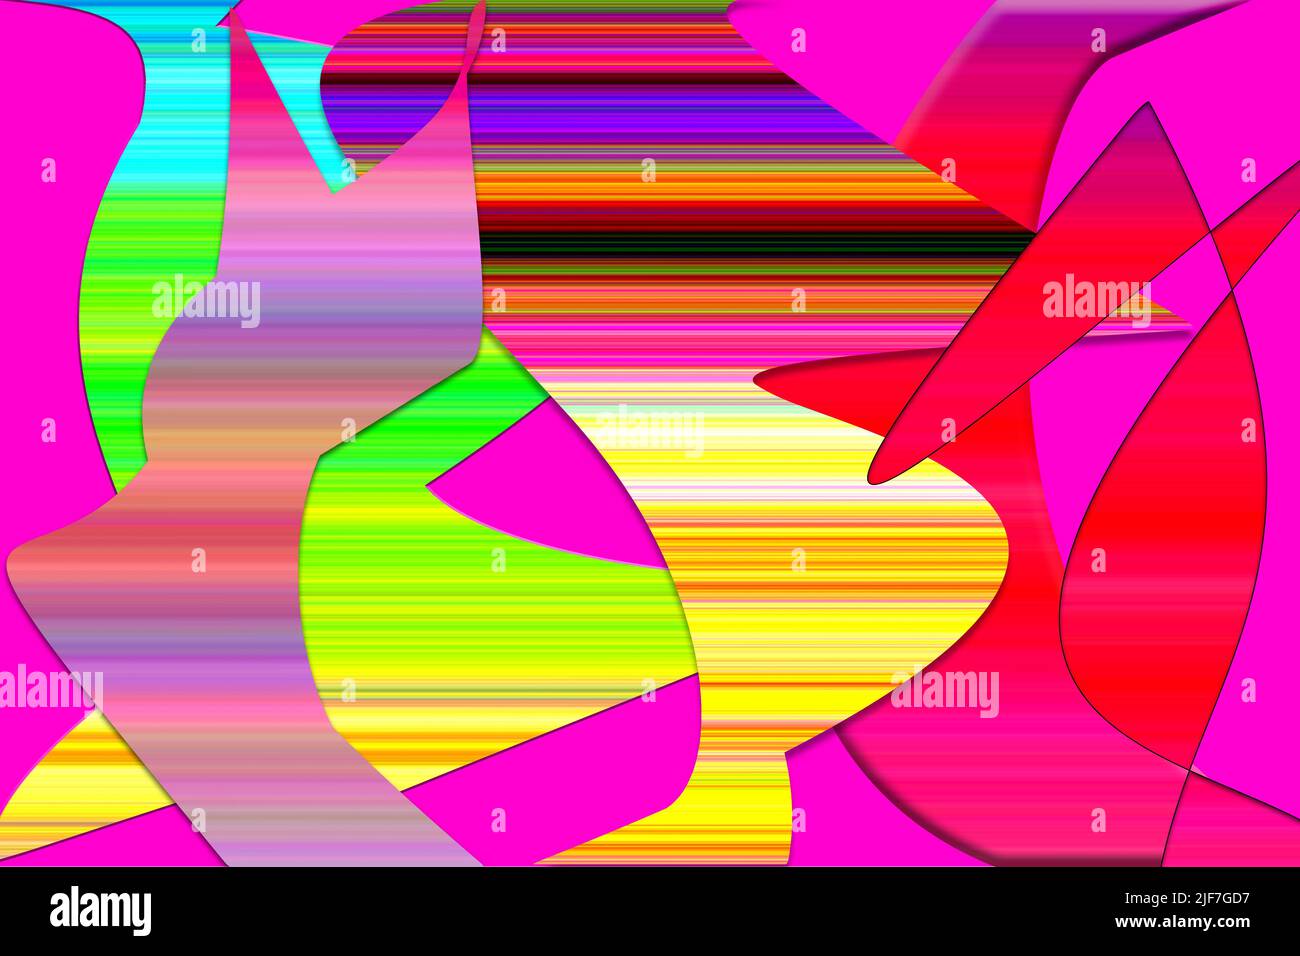 Digital art, 3d illustration. random pattern of bright and colorful geometric shapes Stock Photo